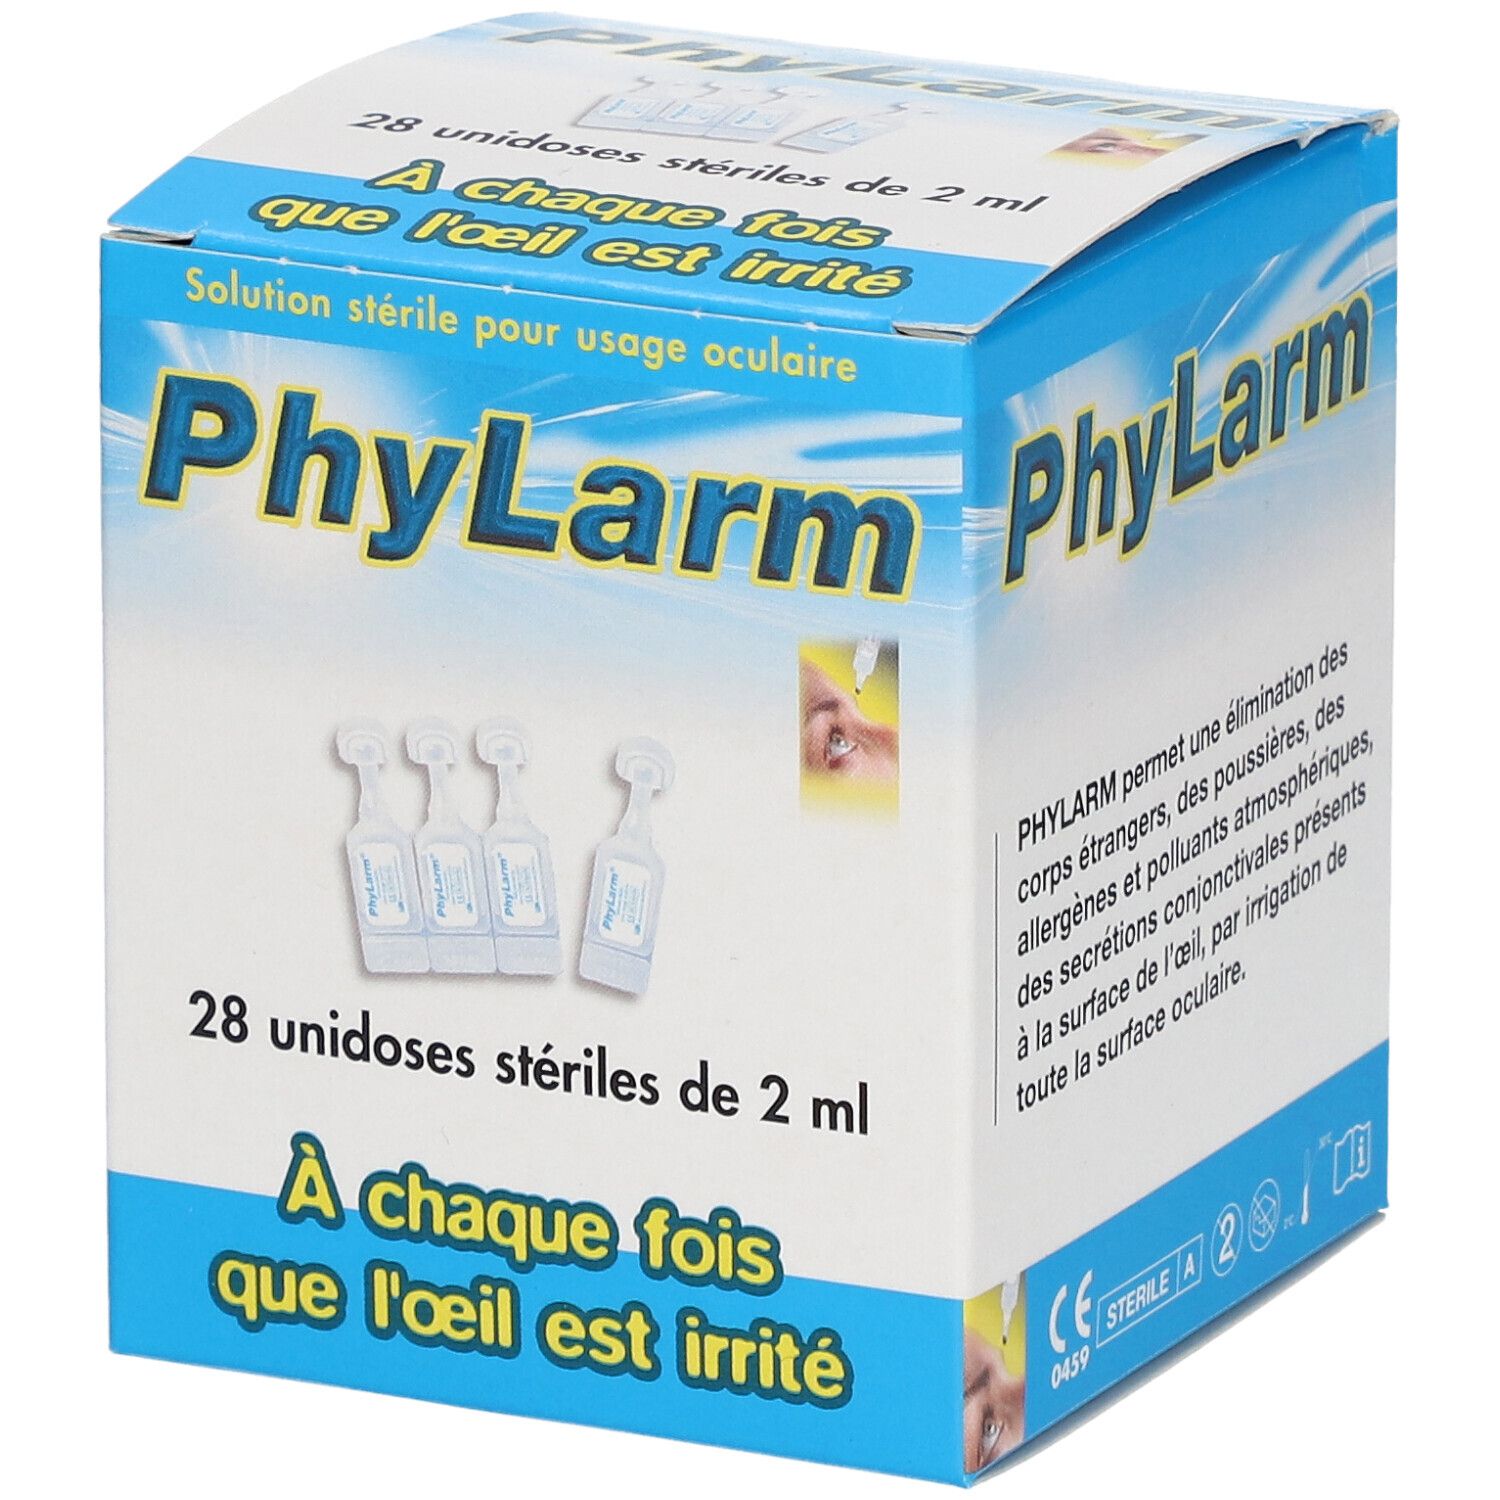 Physiodose Sérum physiologique stérile 40x5 ml - Redcare Pharmacie